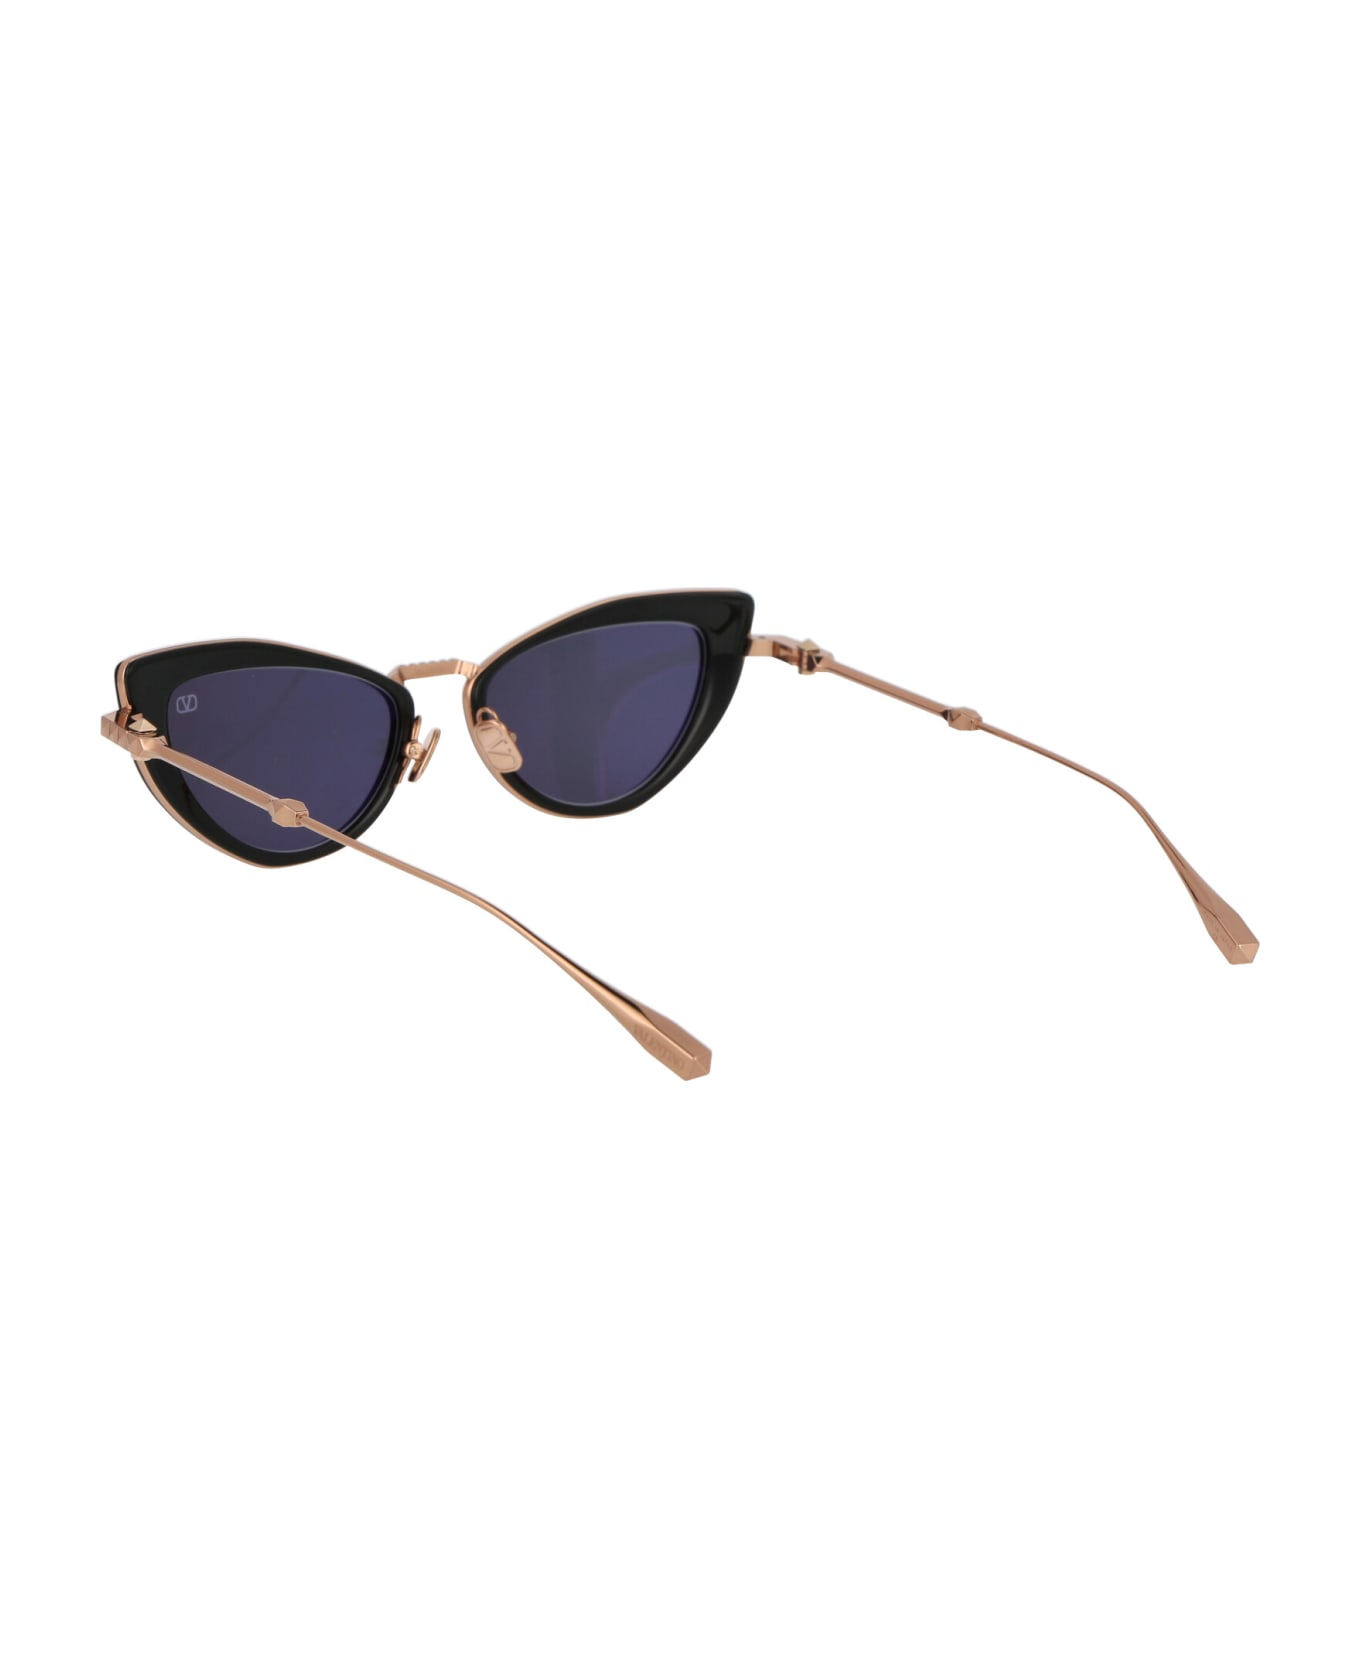 Valentino Eyewear Viii Sunglasses - ROSE GOLD W/ DARK GREY  サングラス